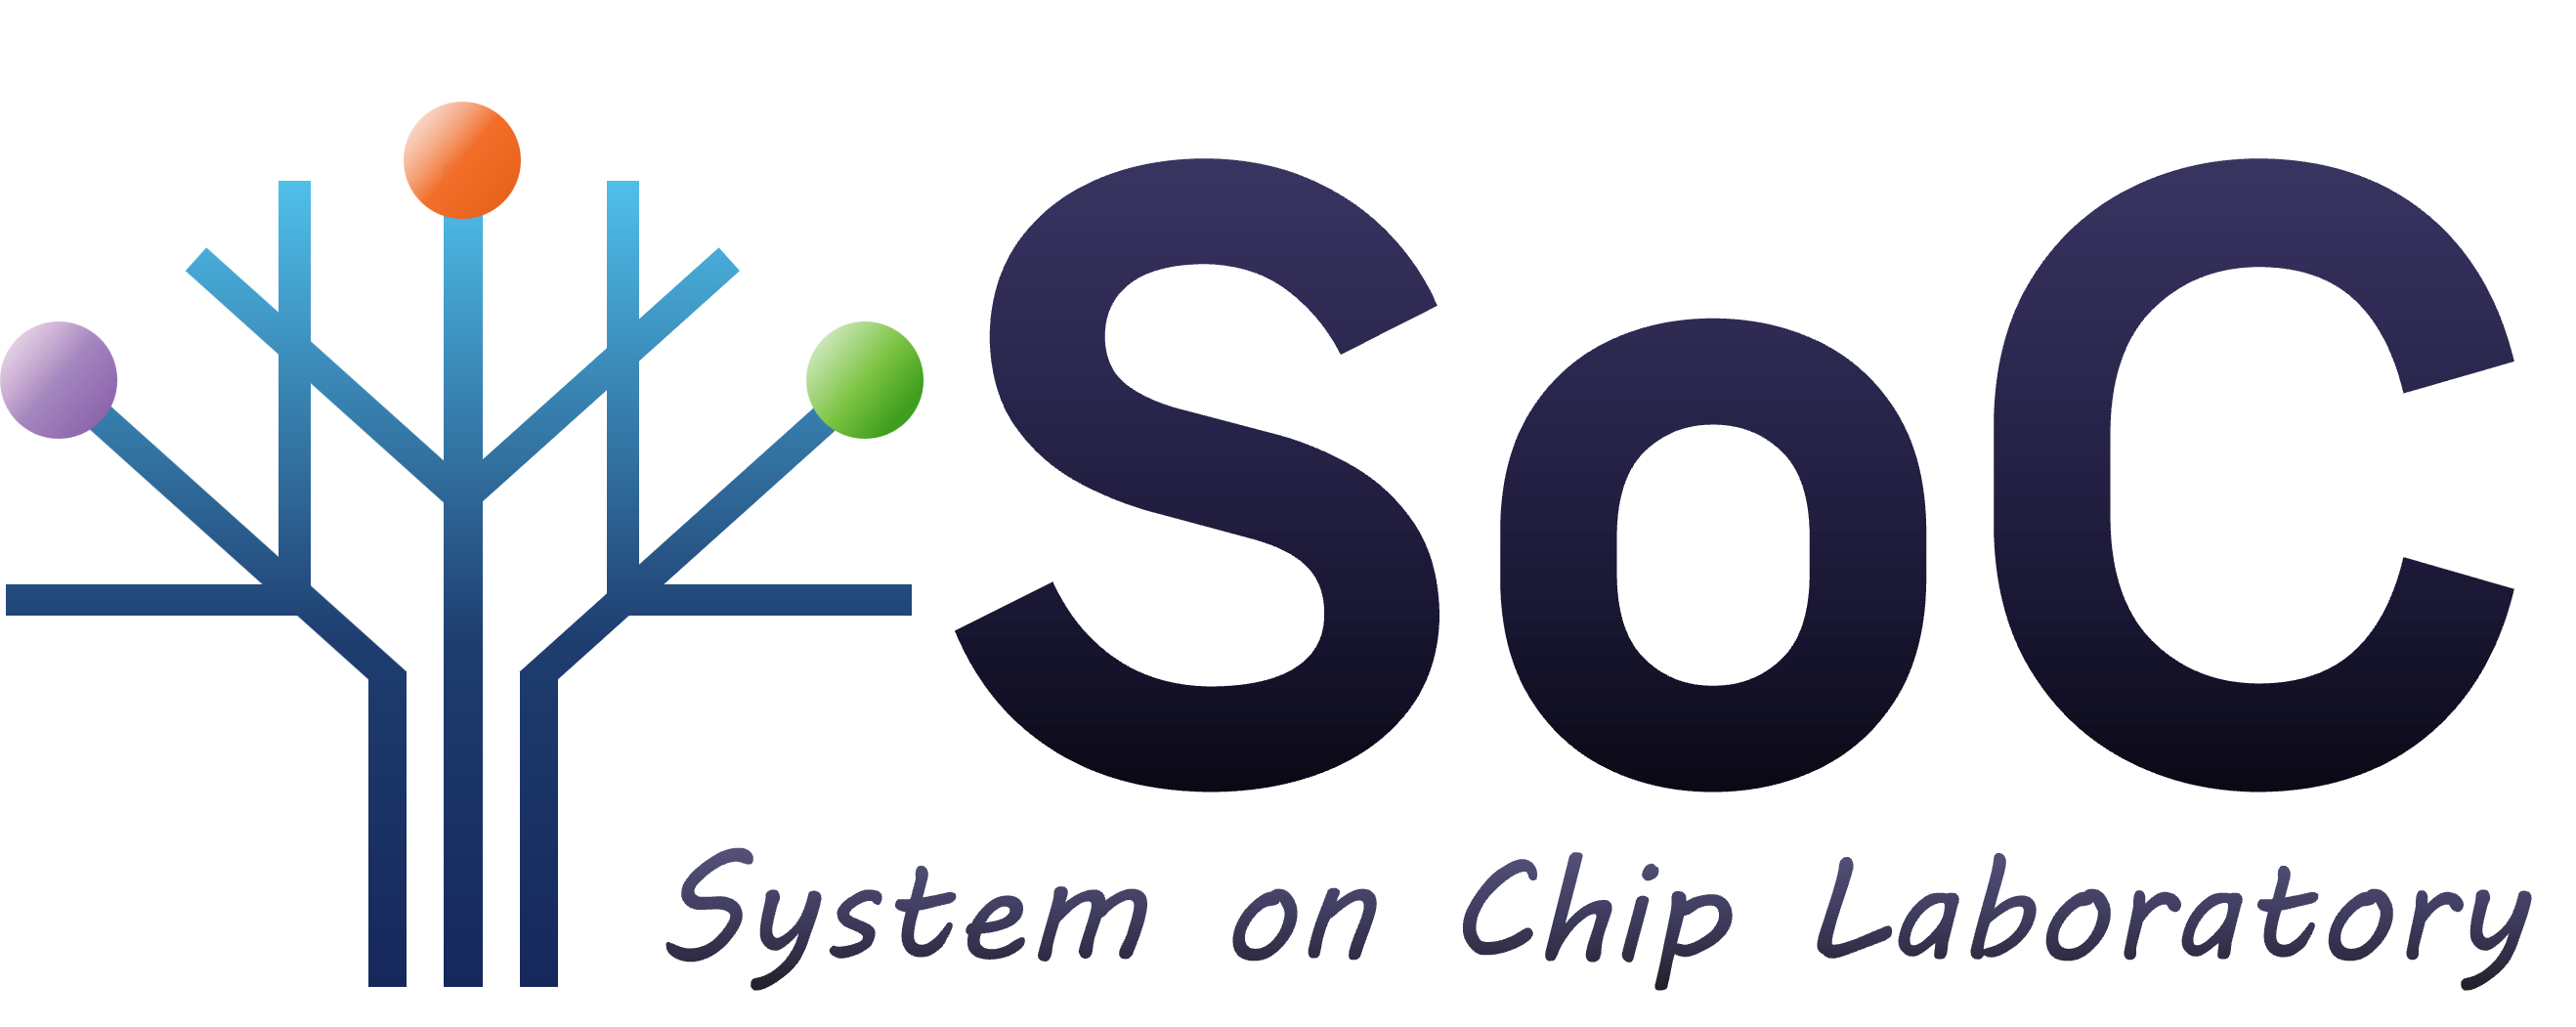 System on Chip Laboratory